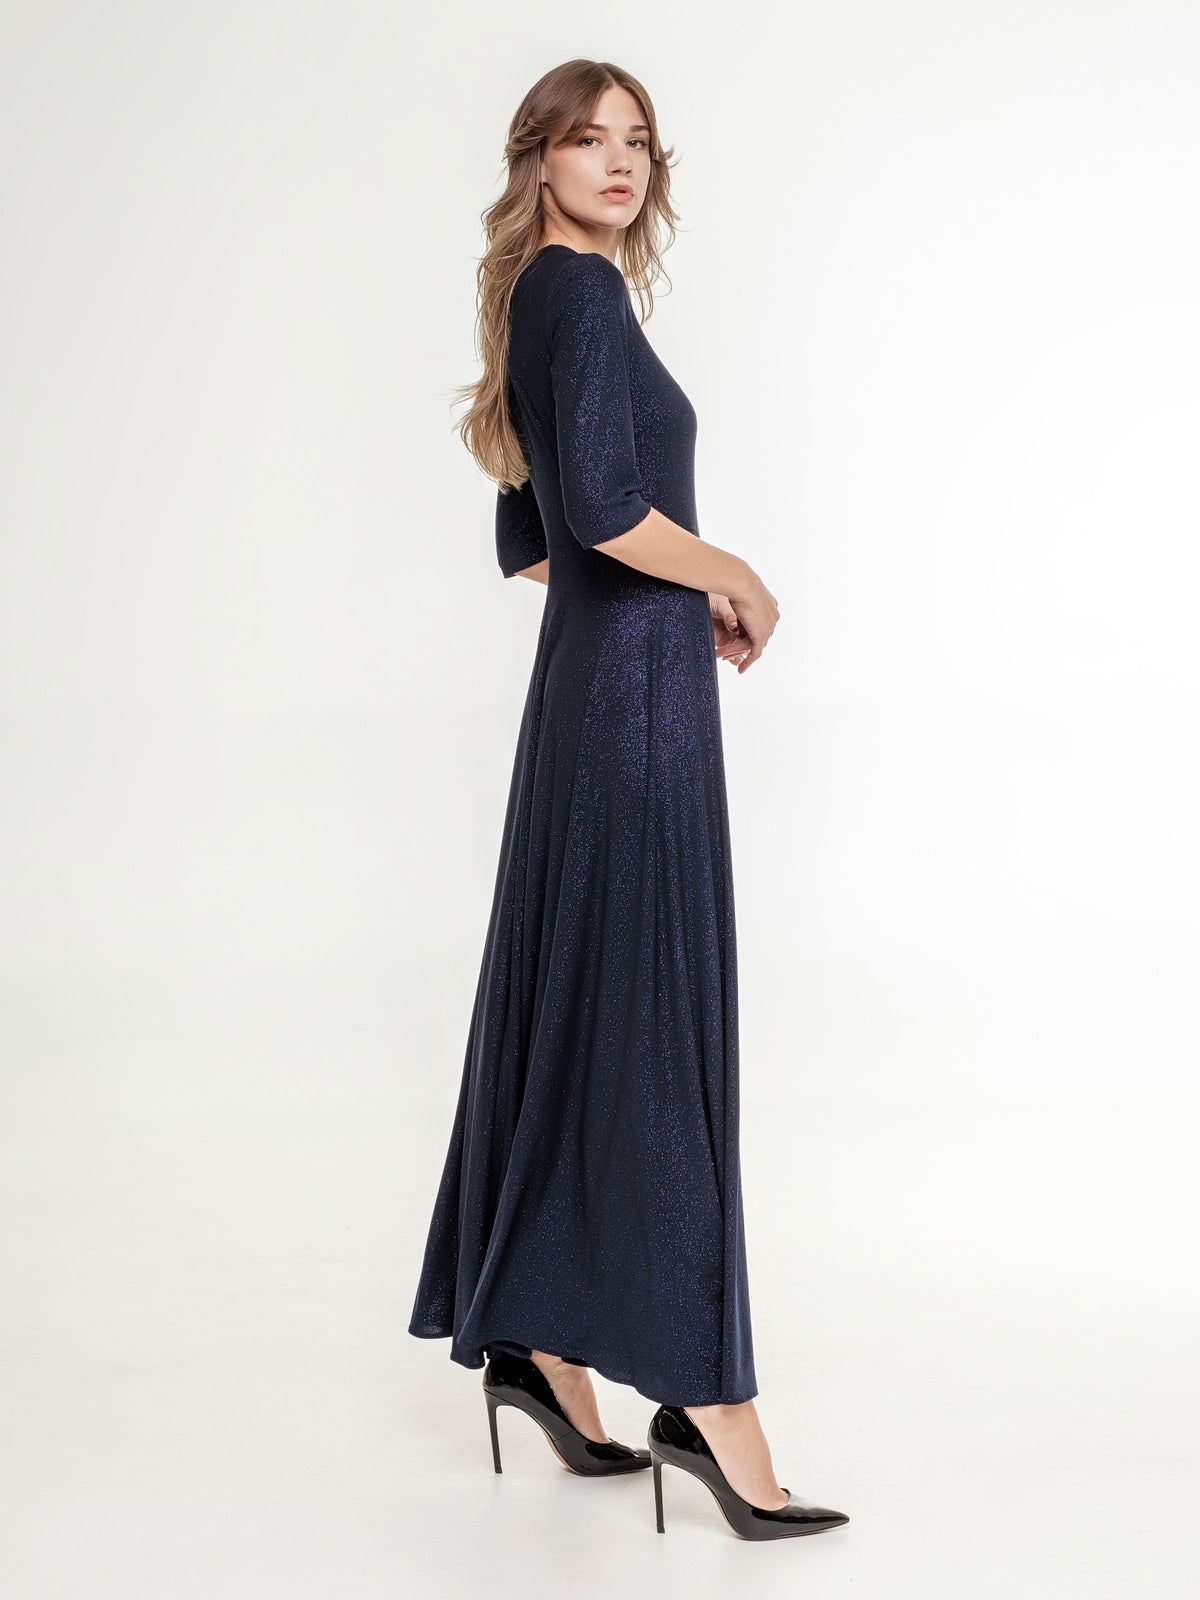 dark blue glittery long dress with back zipper side view